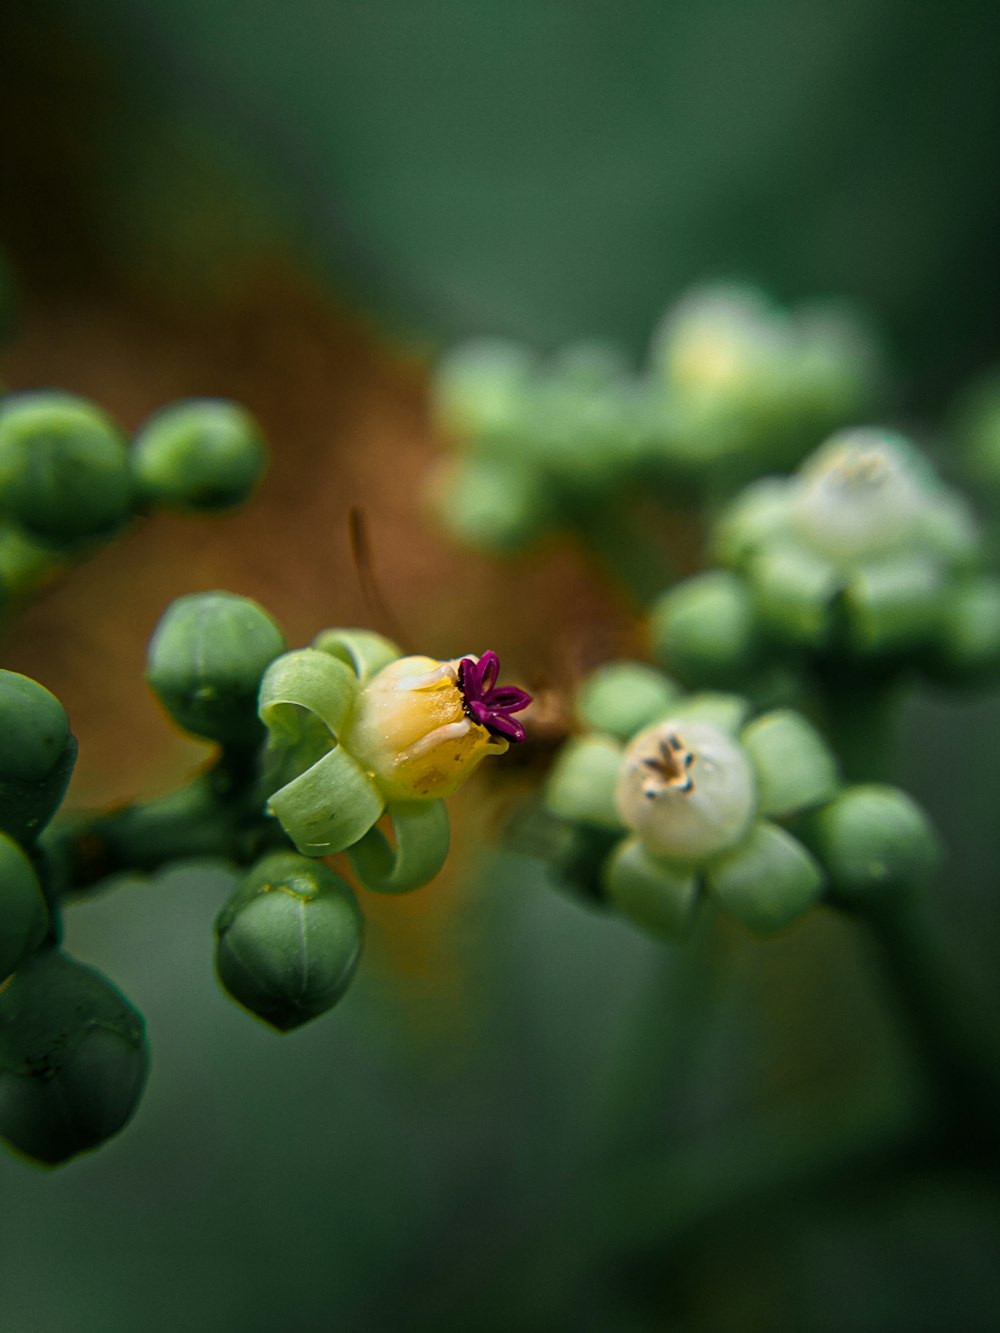 green flower bud in macro shot